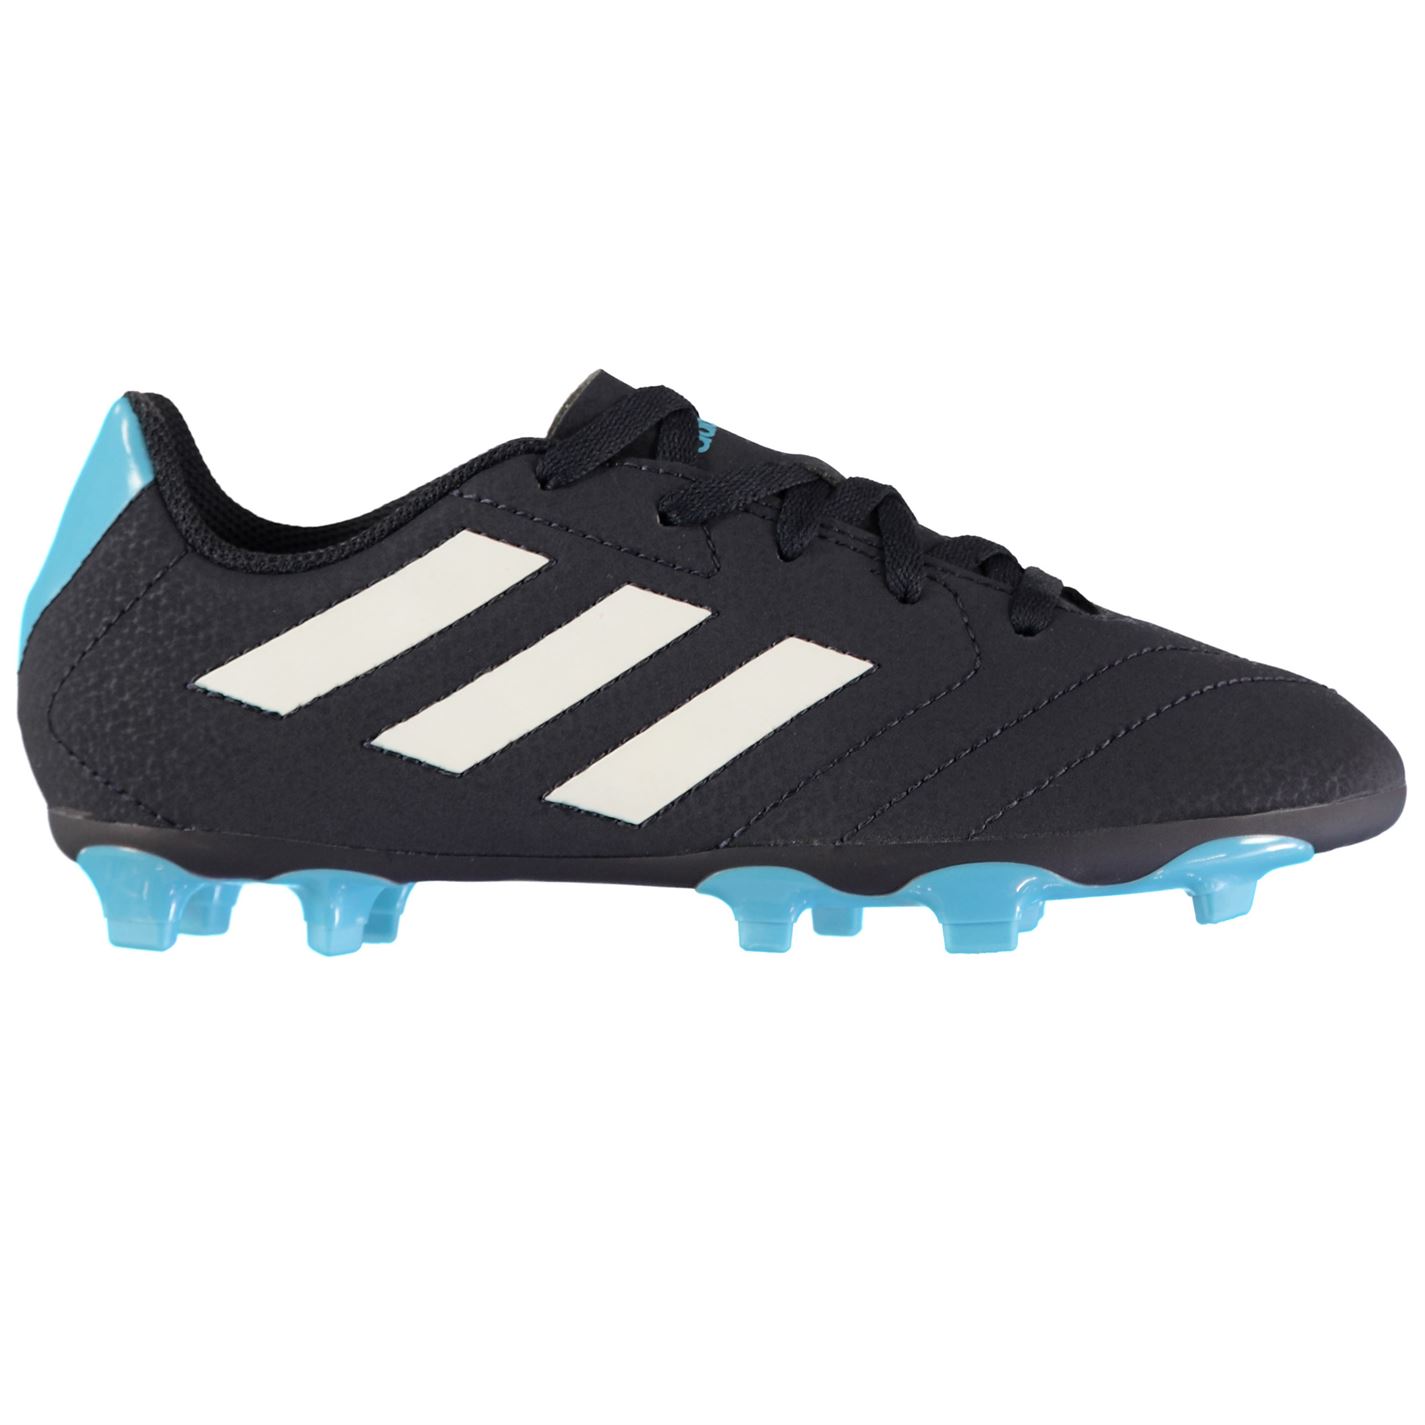 Adidas Goletto FG Childrens Football Boots